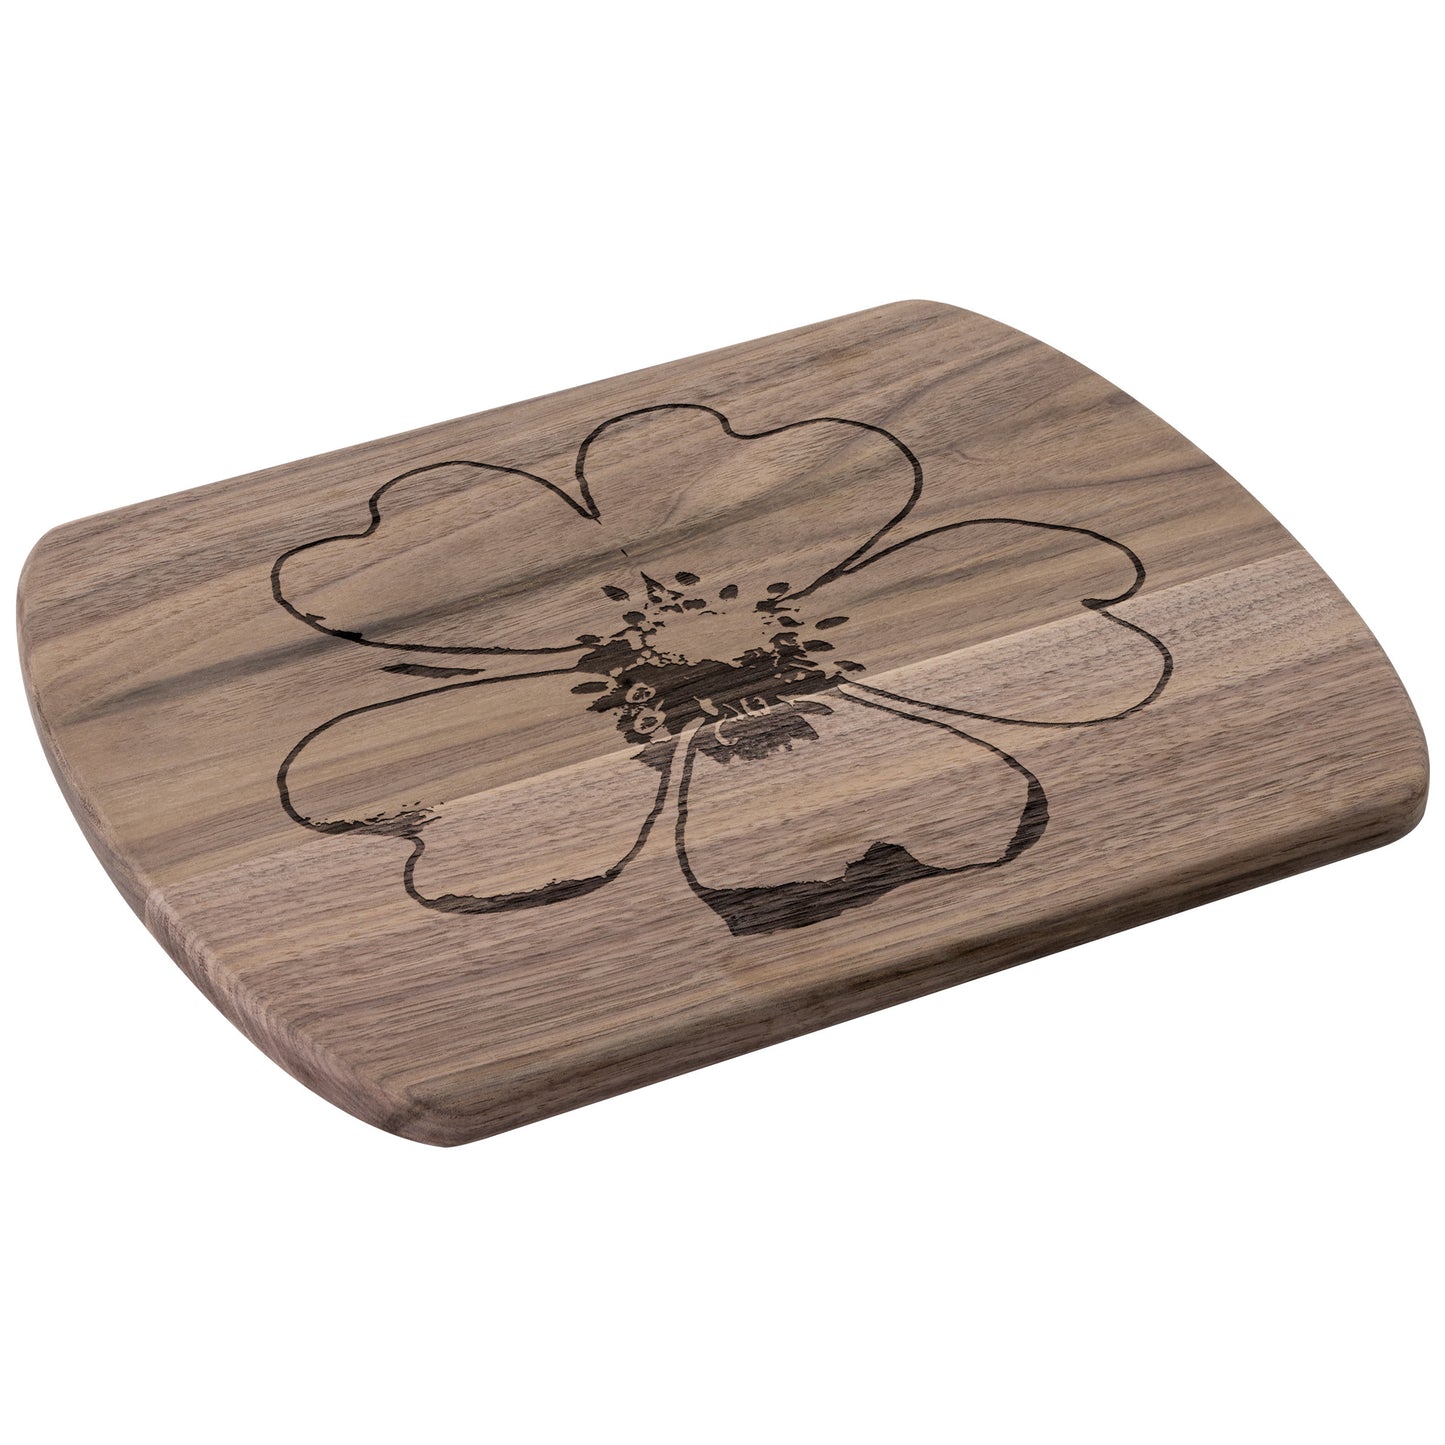 Wildflower Oval Hardwood Cutting Board